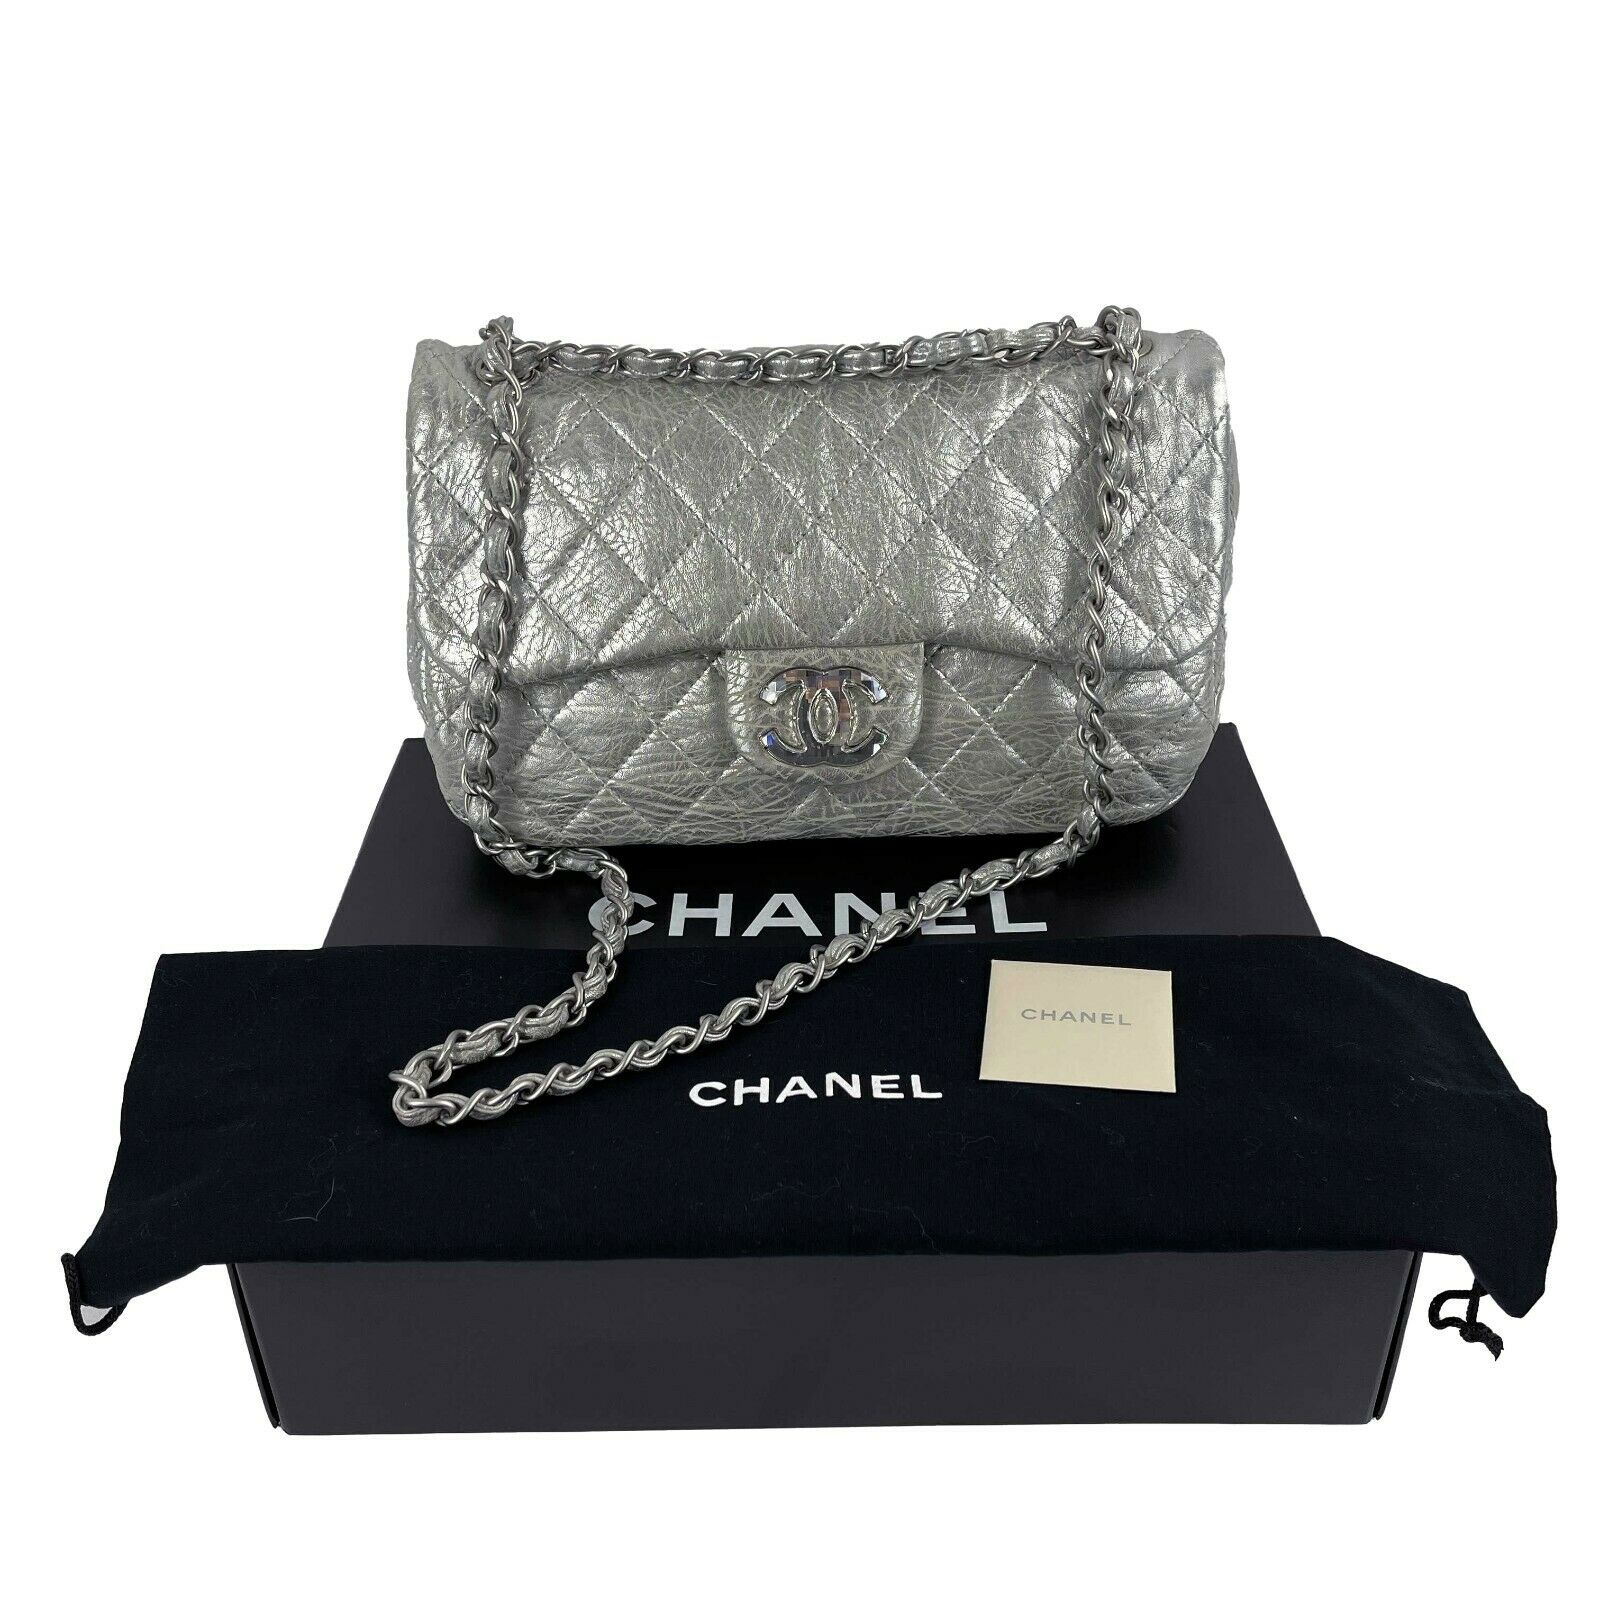 CHANEL - Silver Jumbo Icy Crinkled Leather Flap Bag - Shoulder Bag